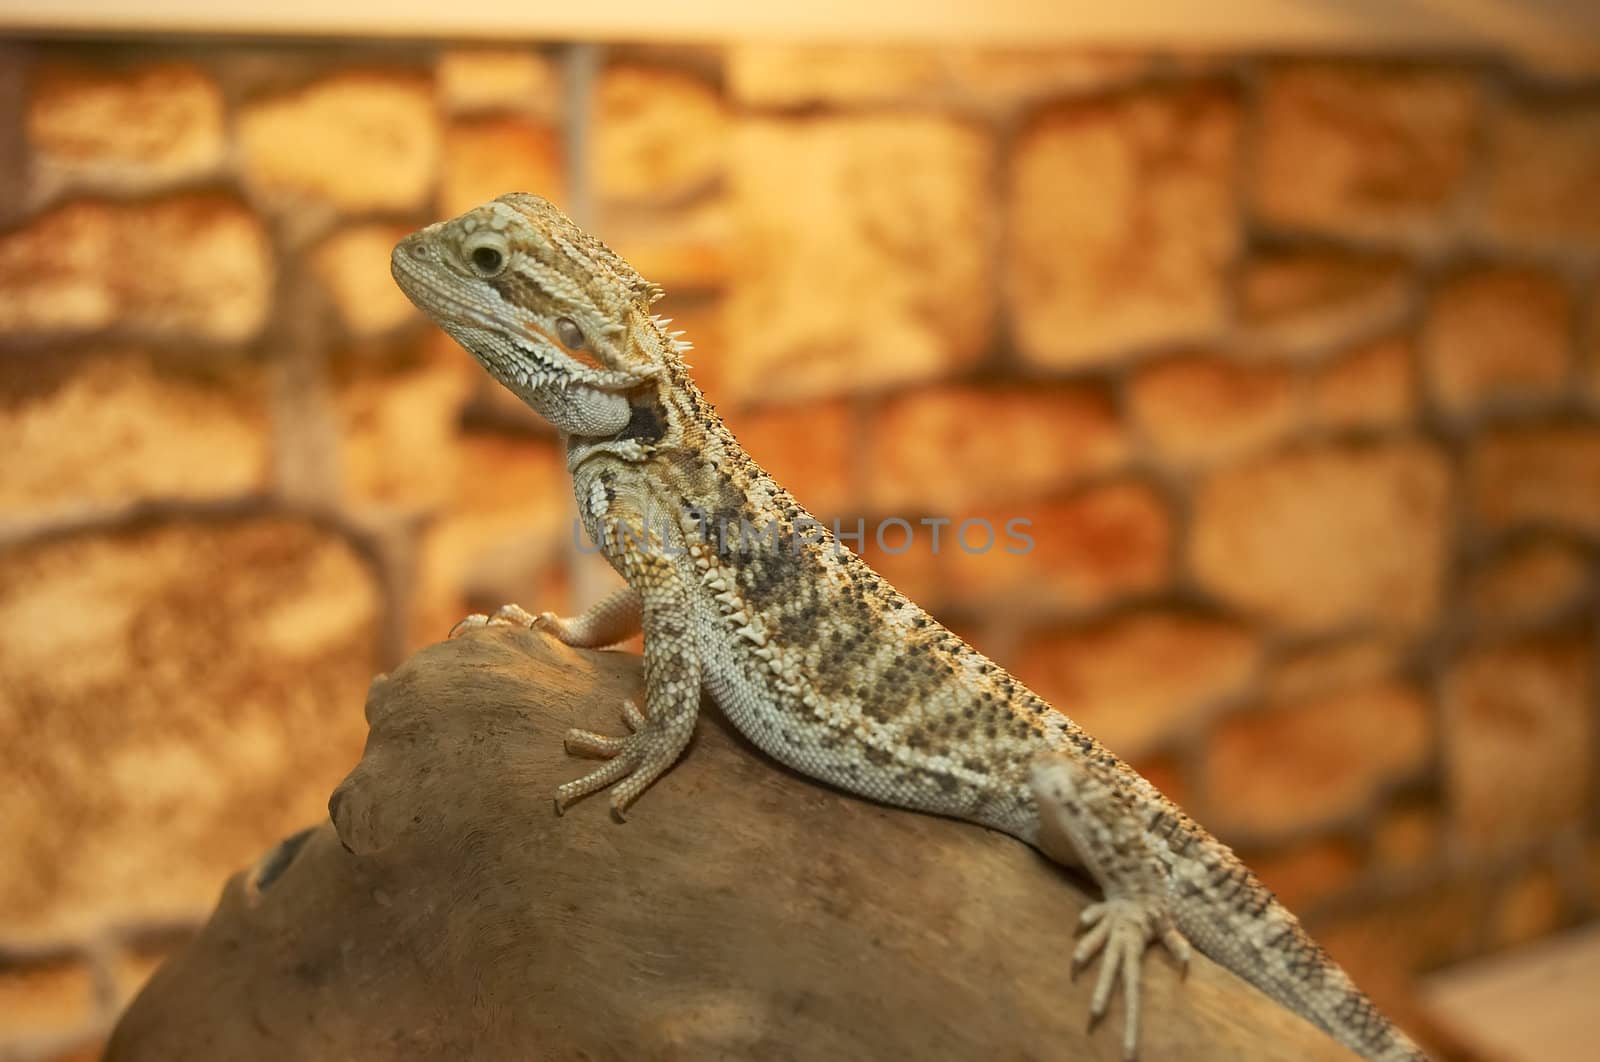 The small lizard in a terrarium is heated under a lamp